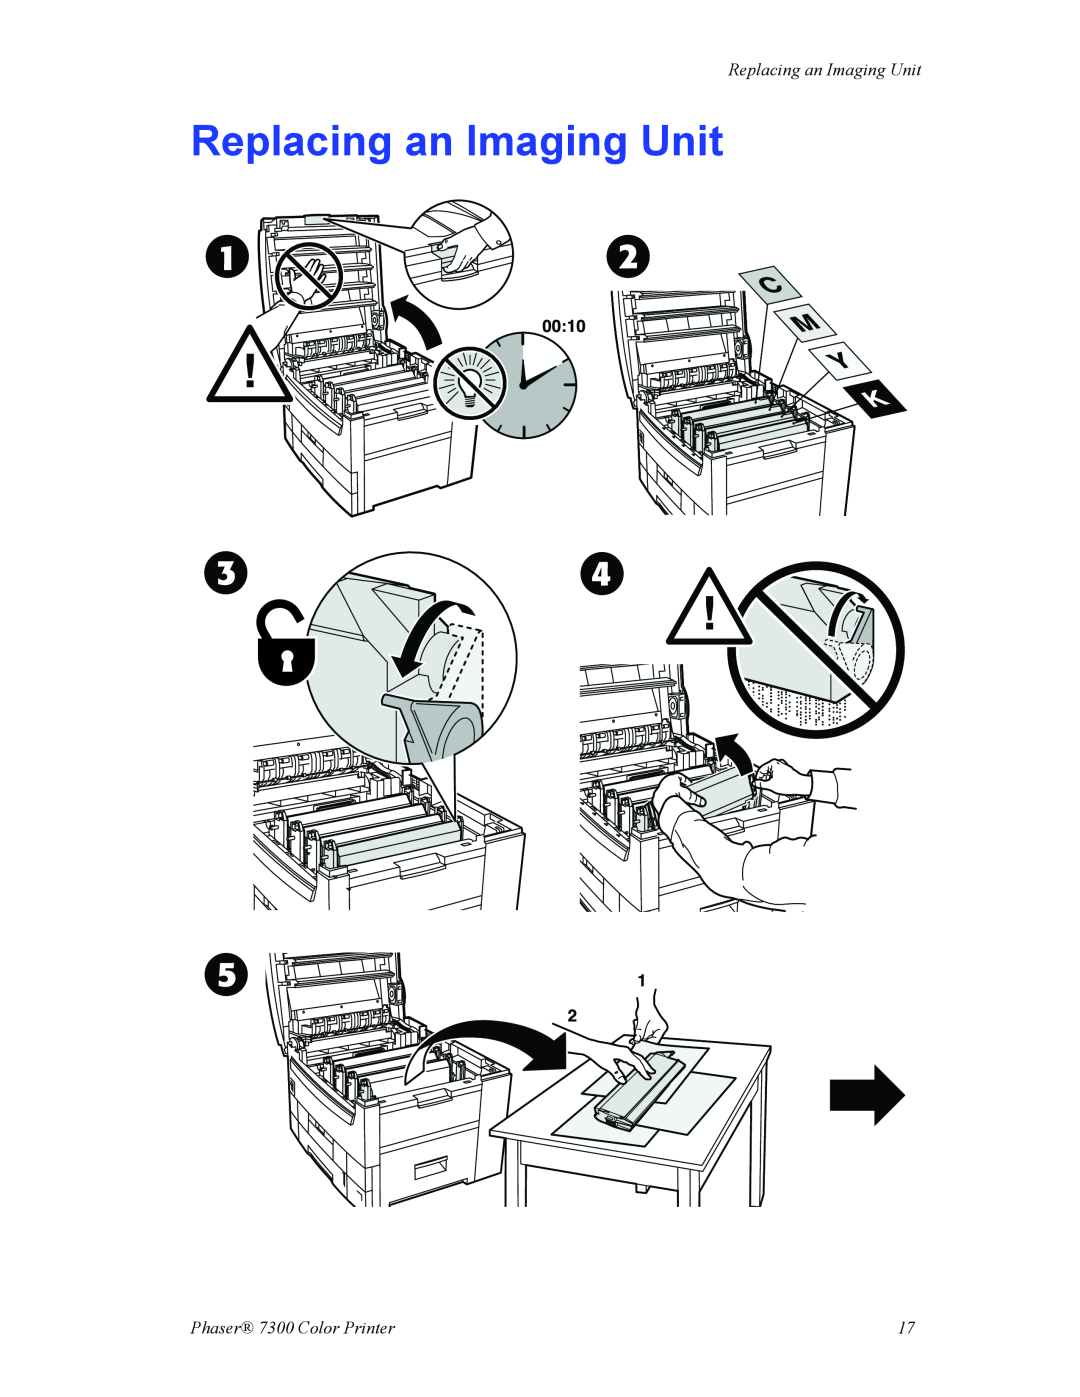 Xerox manual Replacing an Imaging Unit, 0010, Phaser 7300 Color Printer 